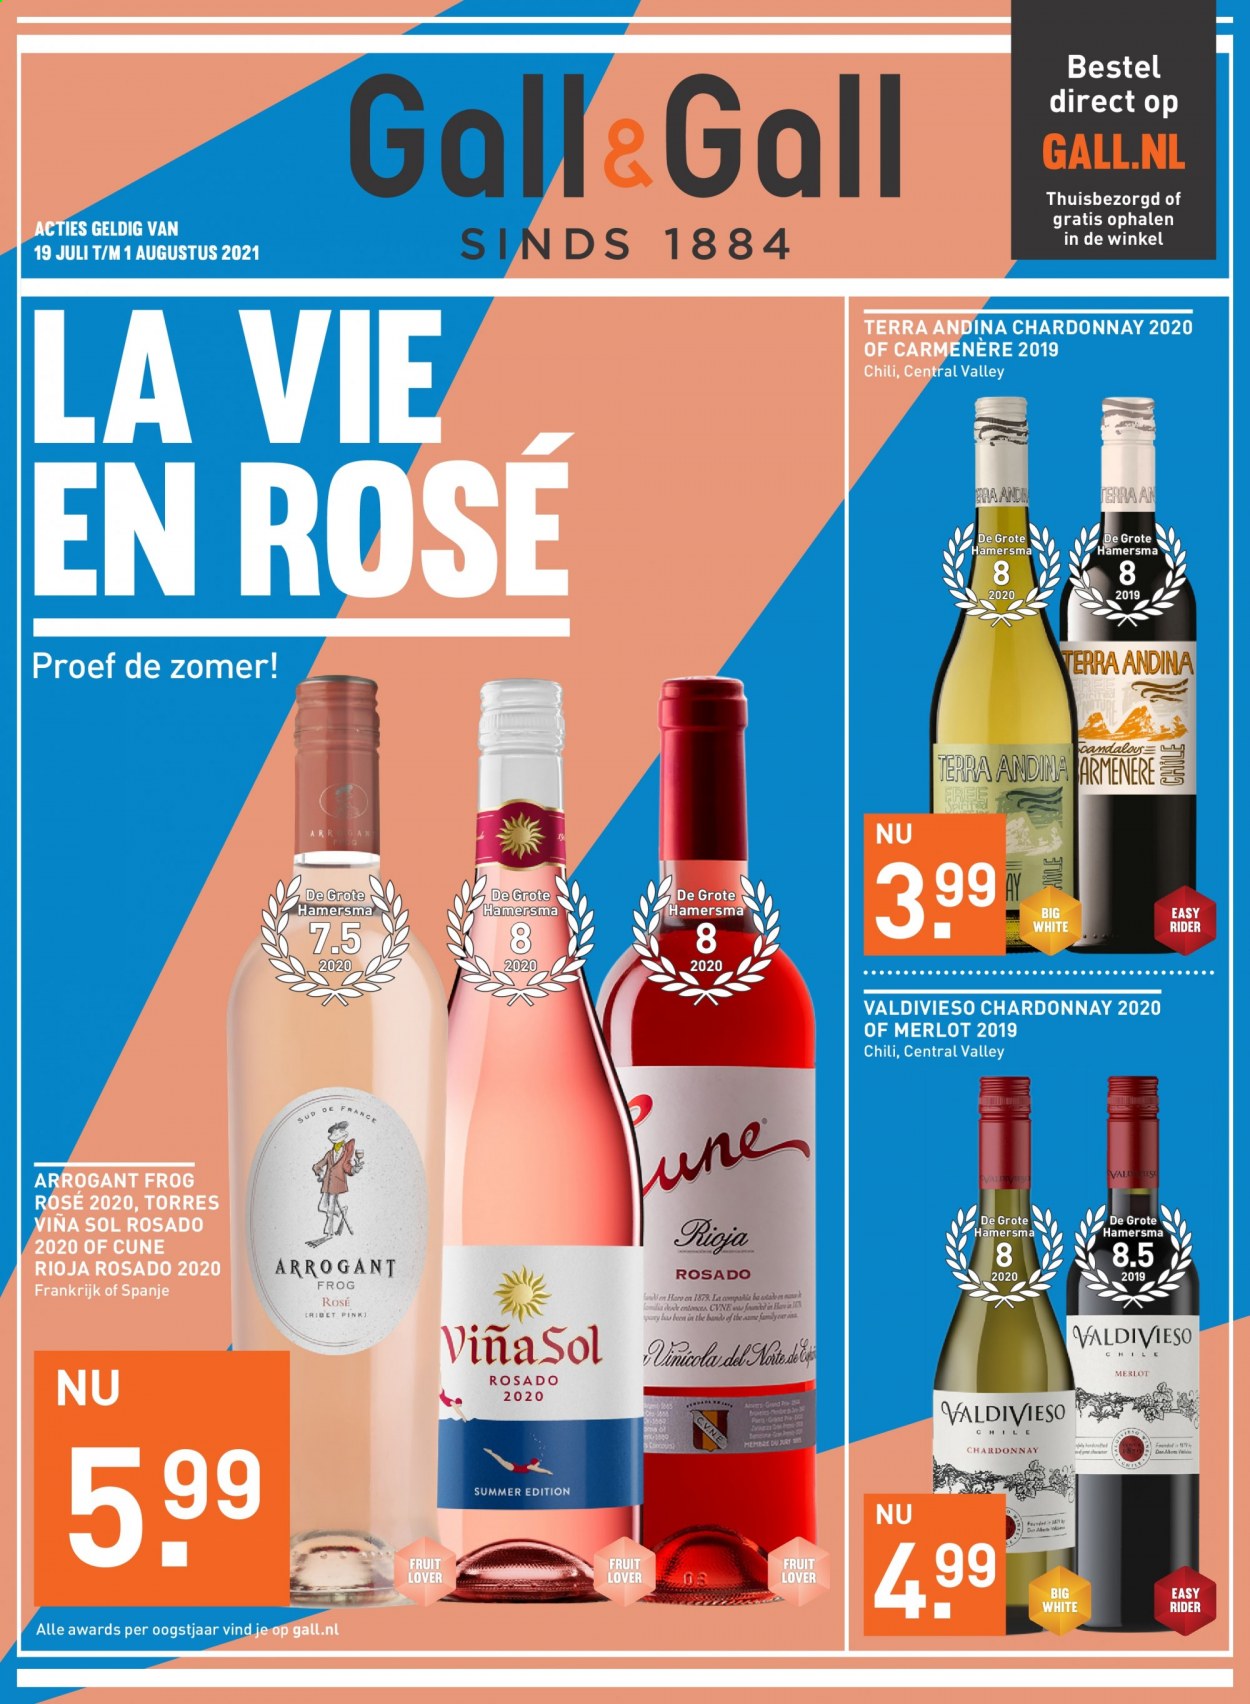 thumbnail - Gall & Gall-aanbieding - 19-7-2021 - 1-8-2021 -  producten in de aanbieding - Carmenère, Chardonnay, Merlot, Rioja. Pagina 1.